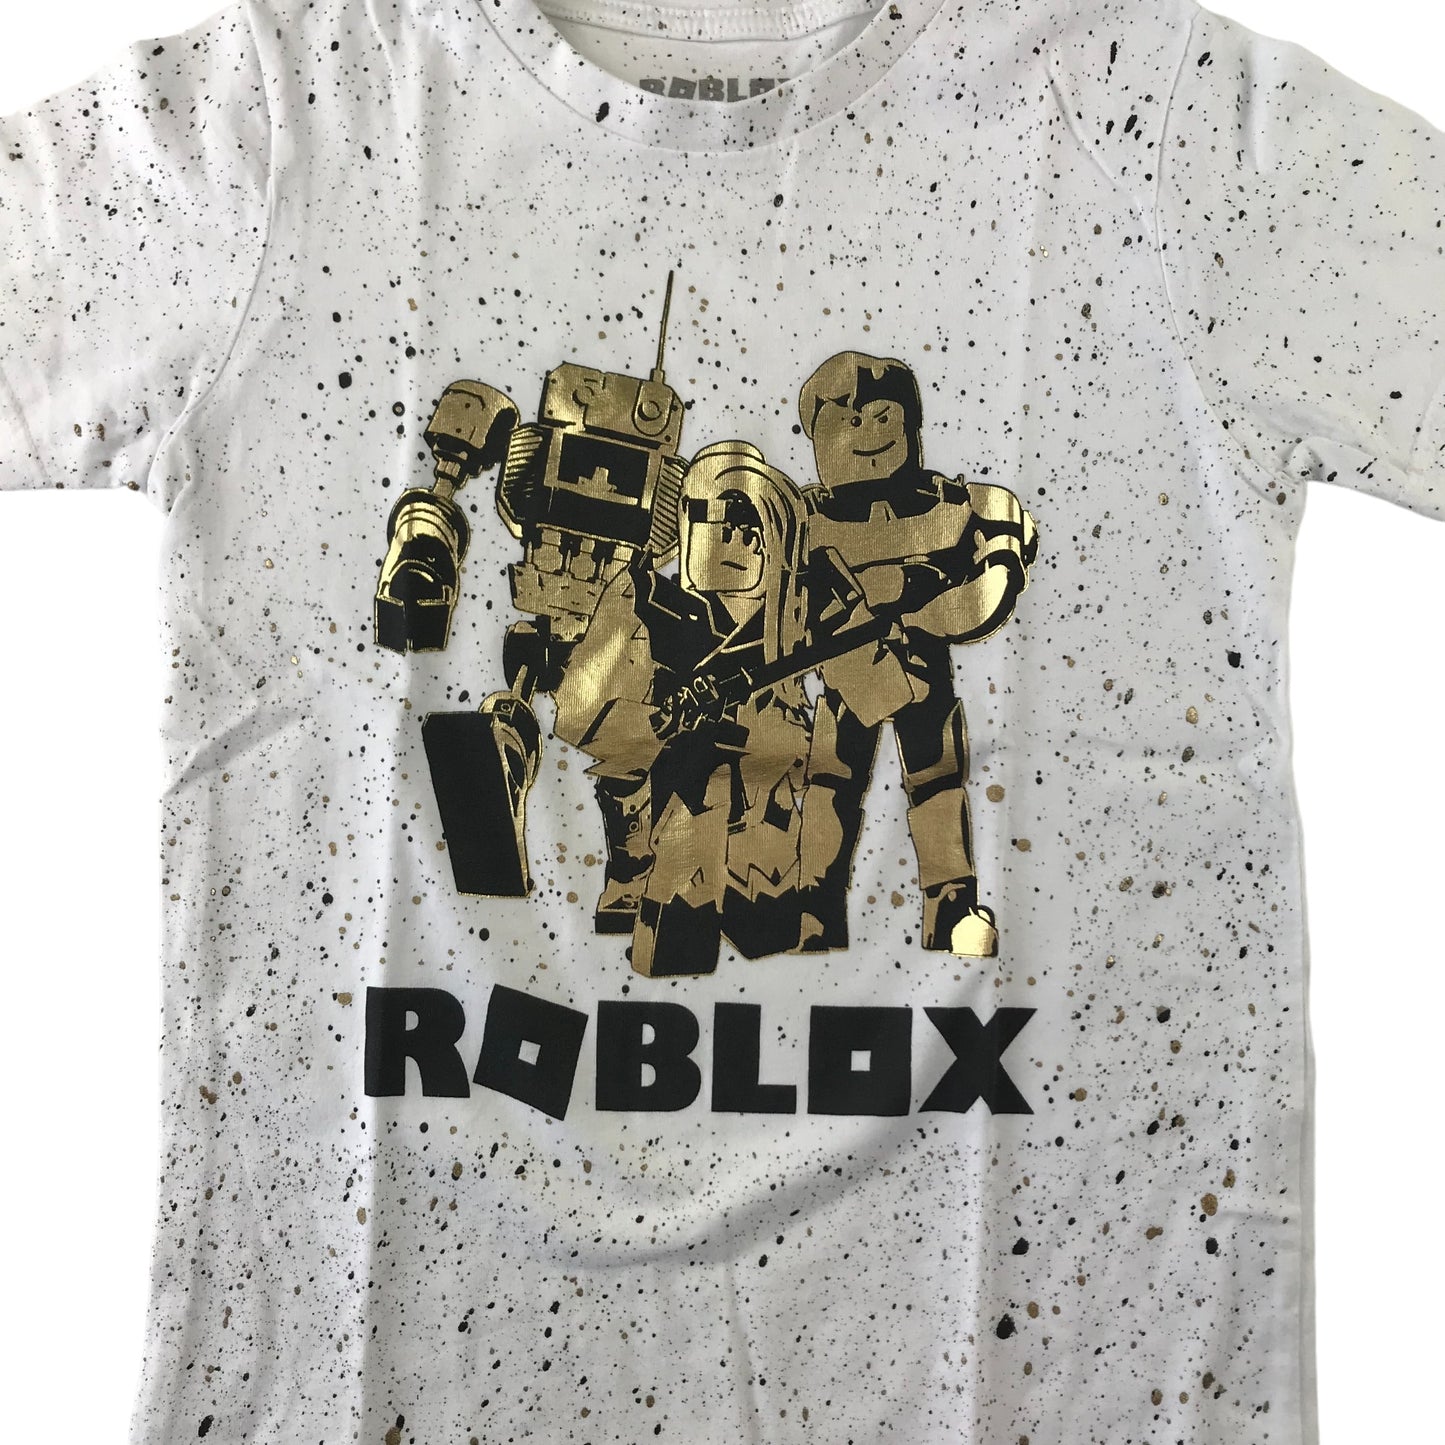 Roblox T-shirt Age 6 White Splash Pattern Golden Characters Print Cotton